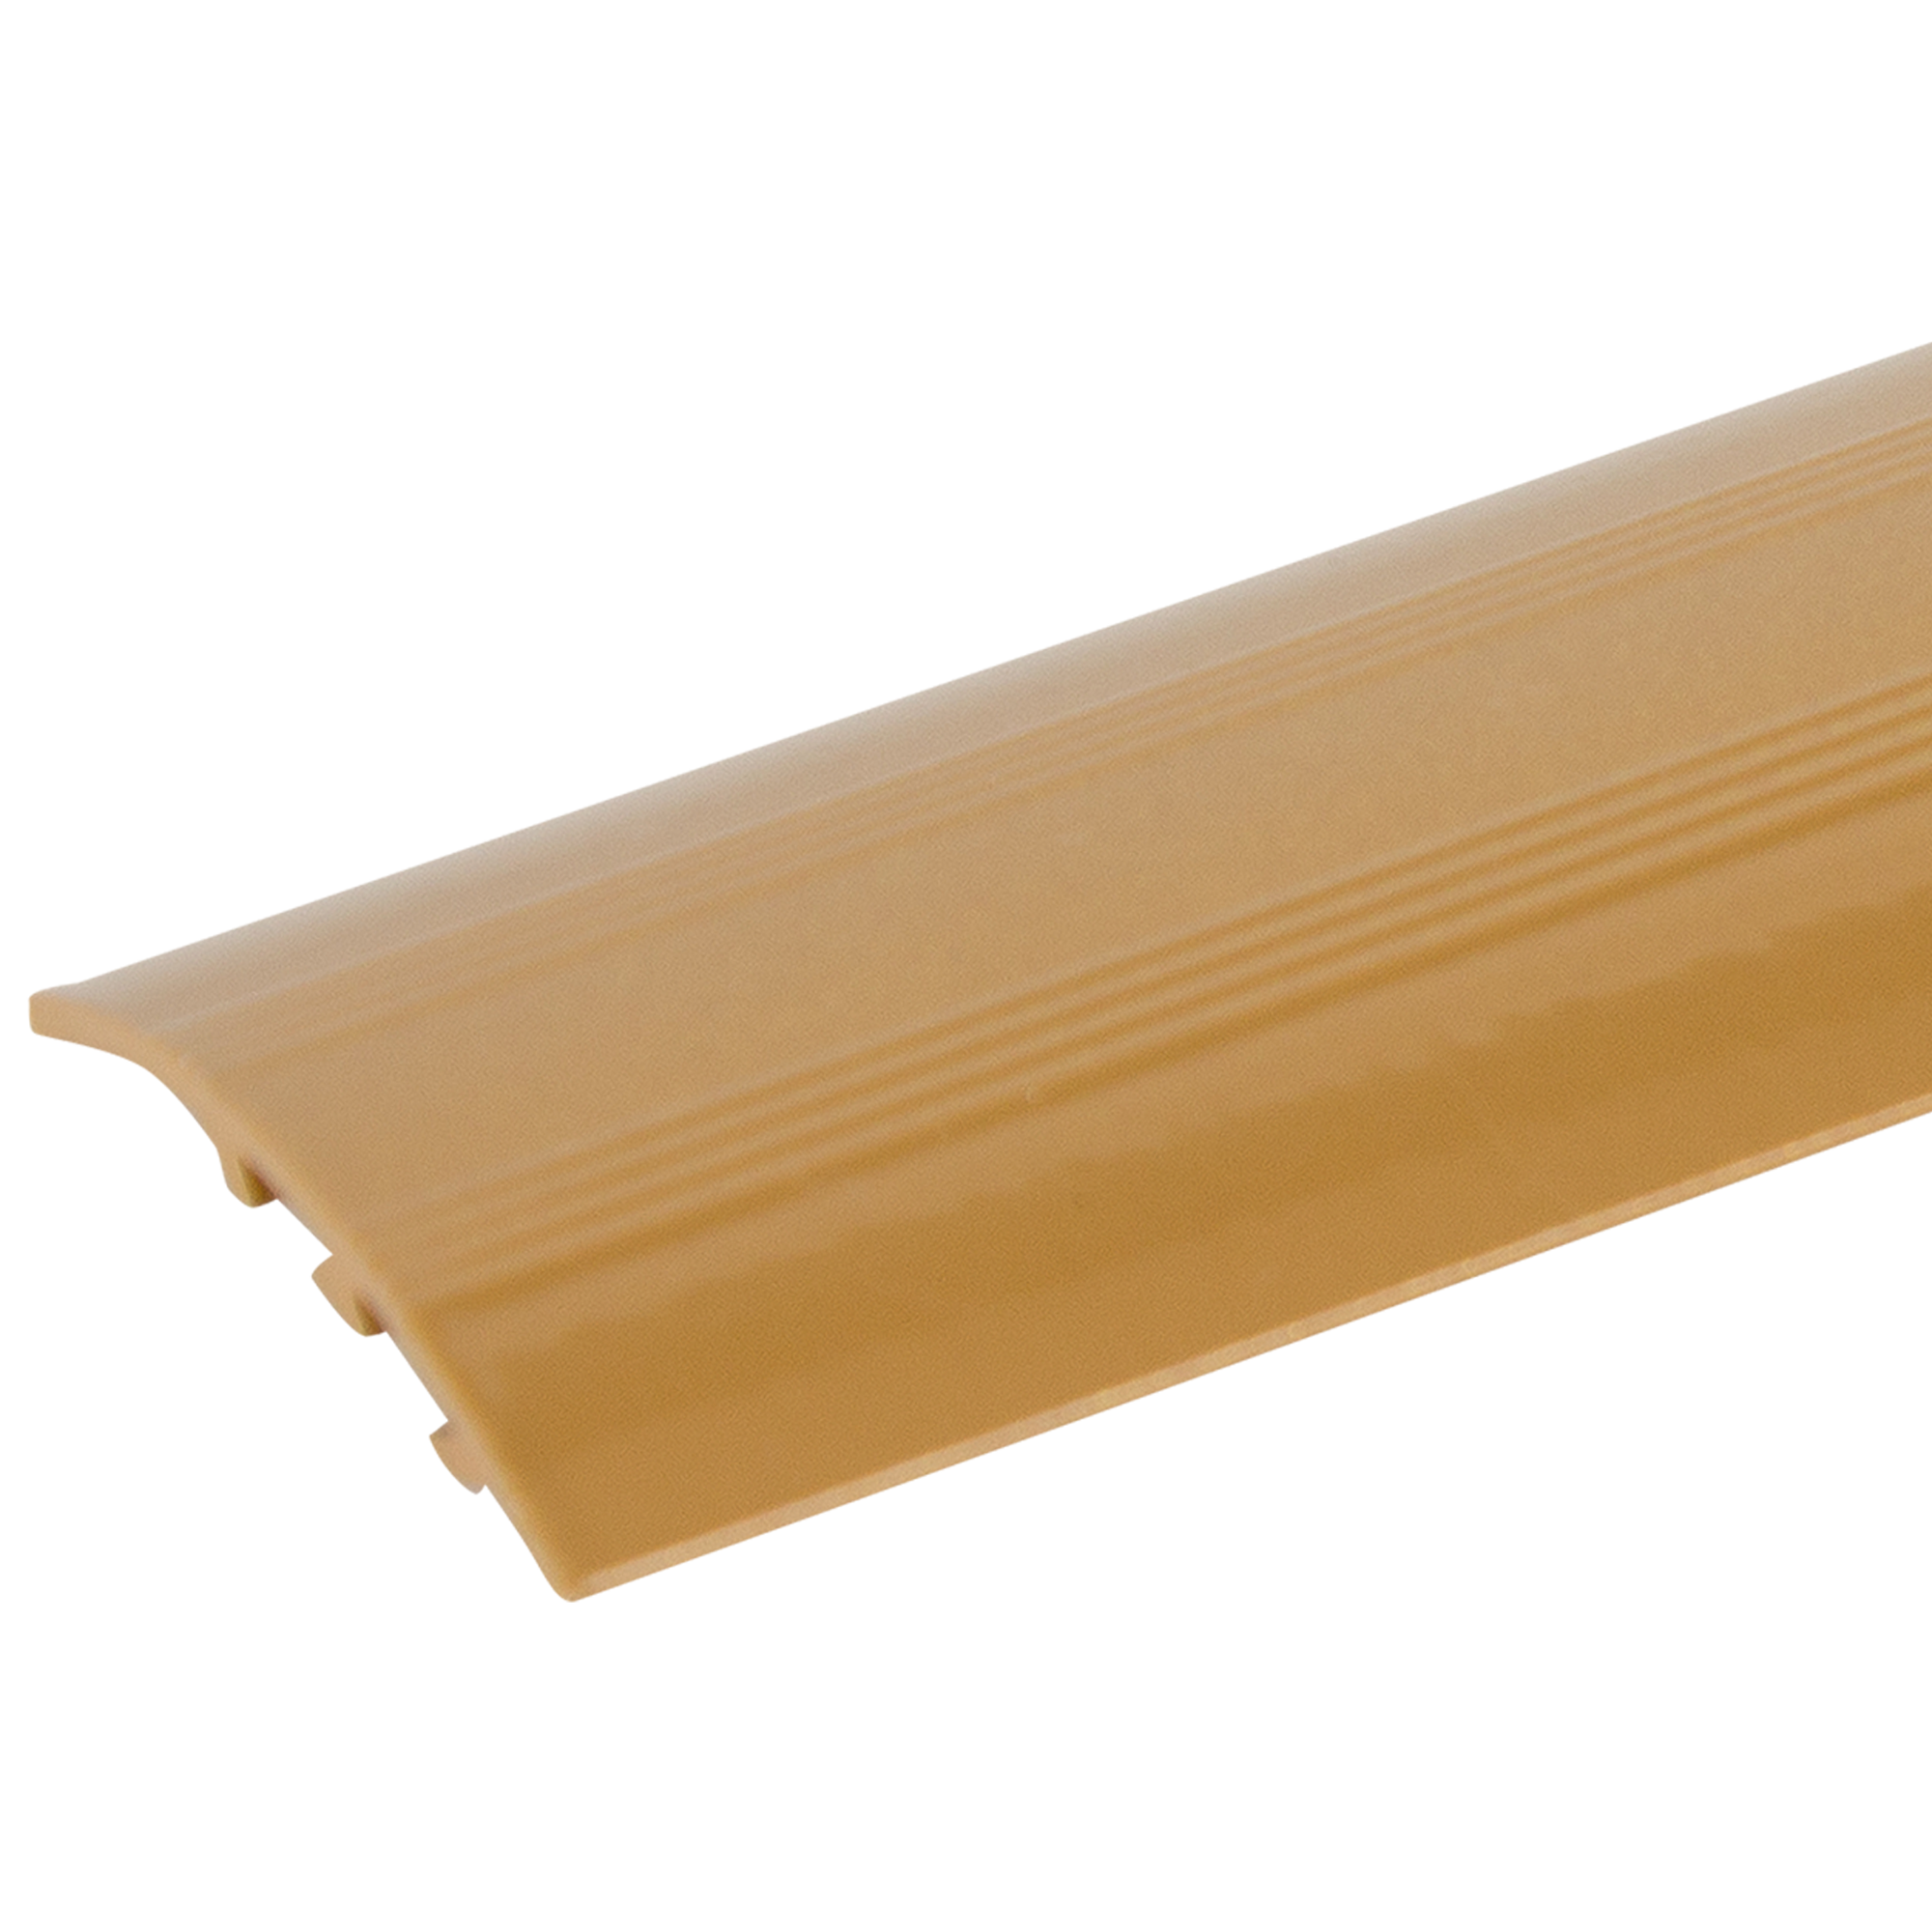 Порог разноуровневый (кант) Artens скрытый, 30х900х0-8 мм, цвет золото .